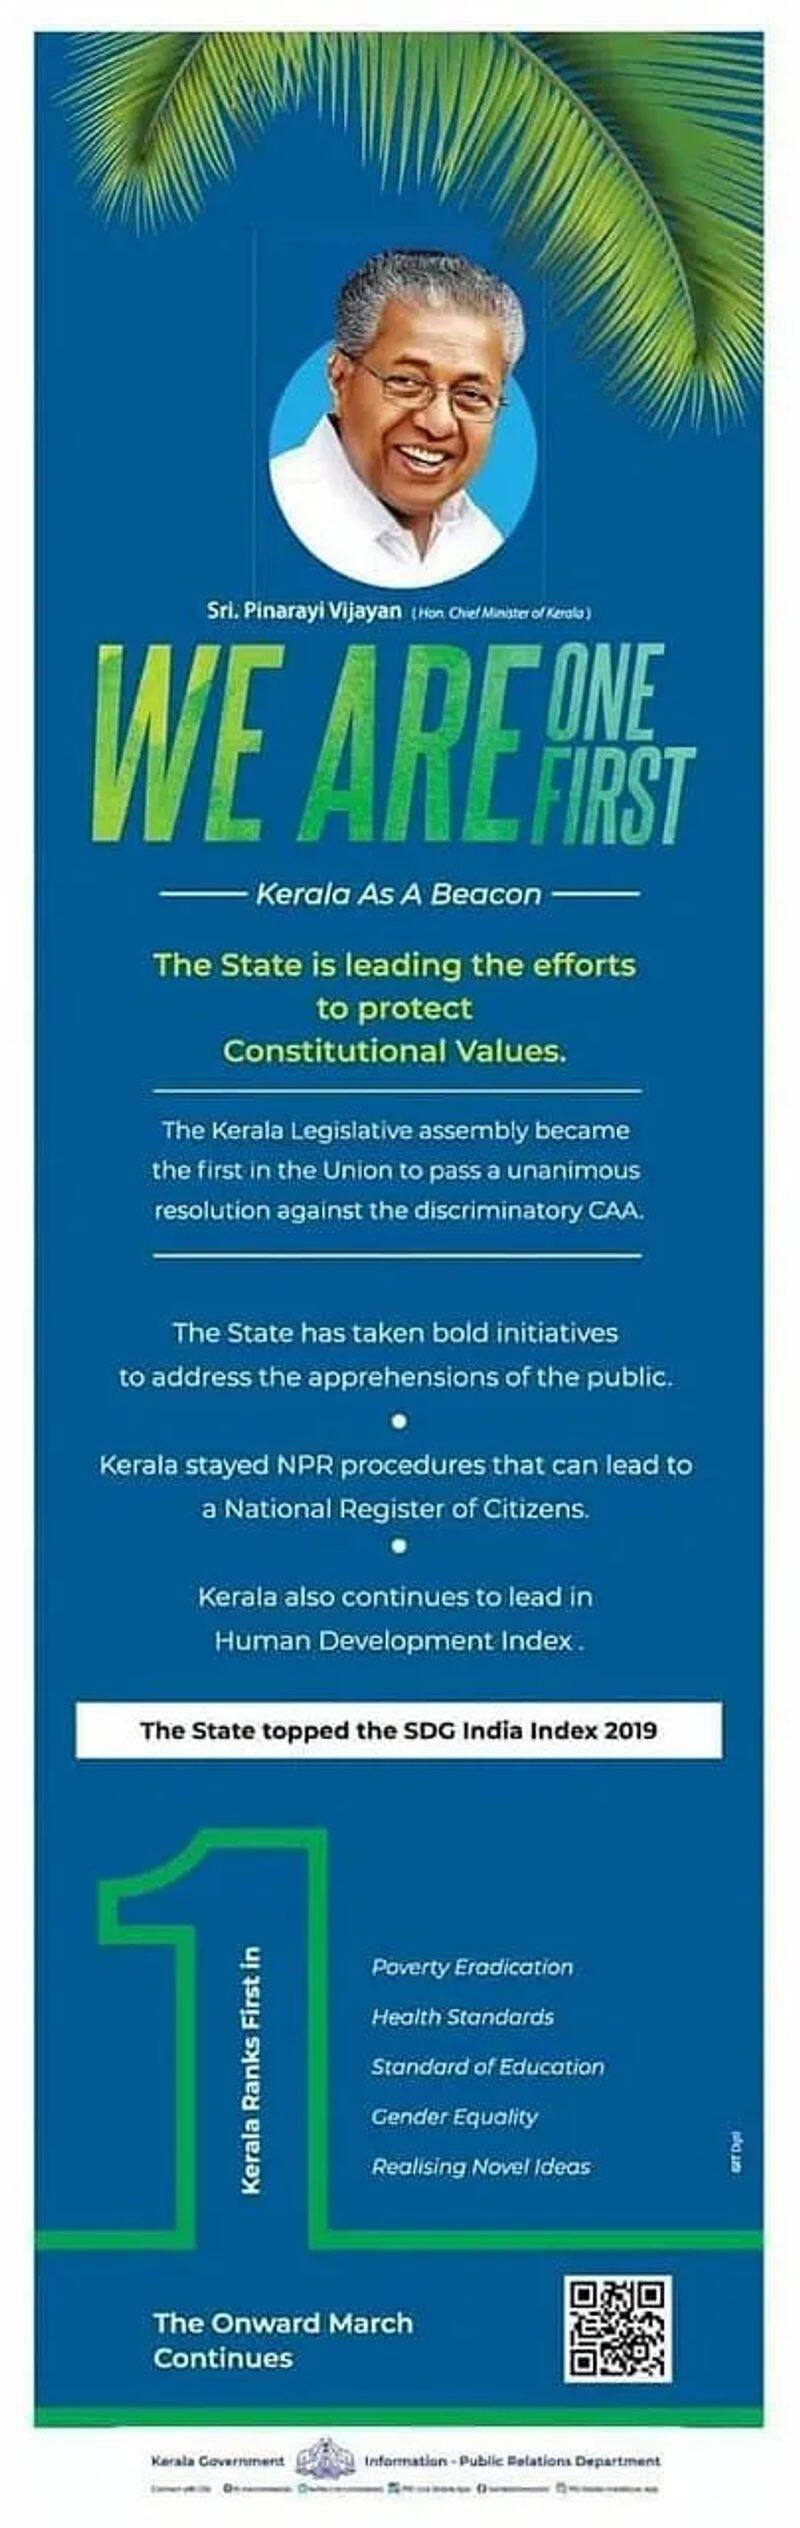 kerala govt advertisements in national medias against citizenship amendment act